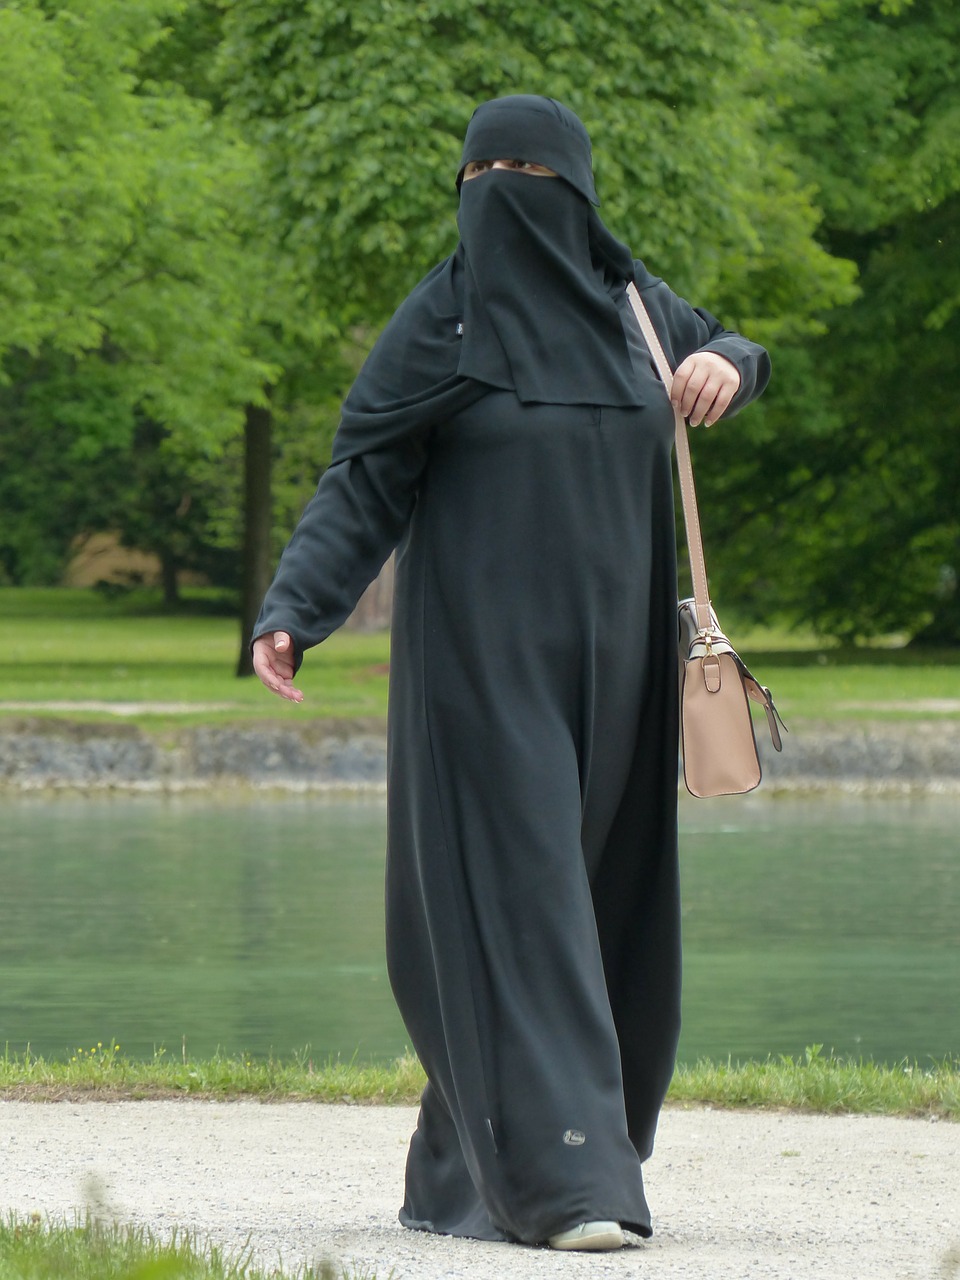 Image - niqab woman muslim girl